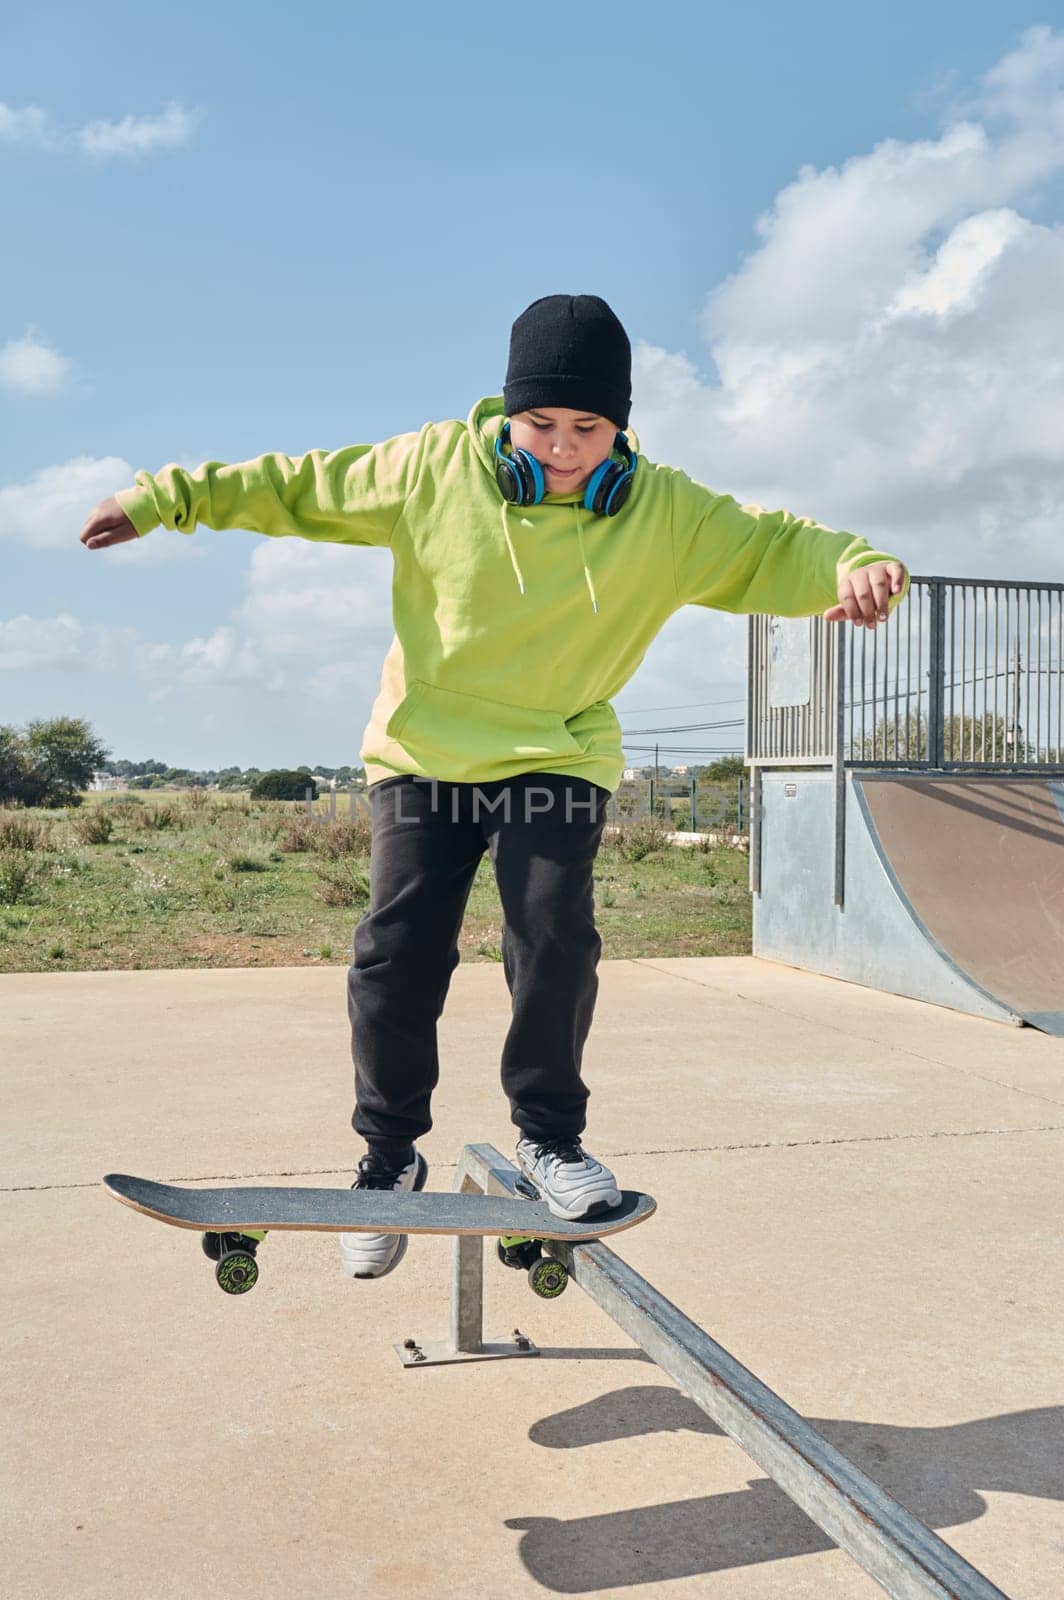 young, teenager, skateboarding, jumping, on the rink, wearing headphones, green sweatshirt, black hat, swinging